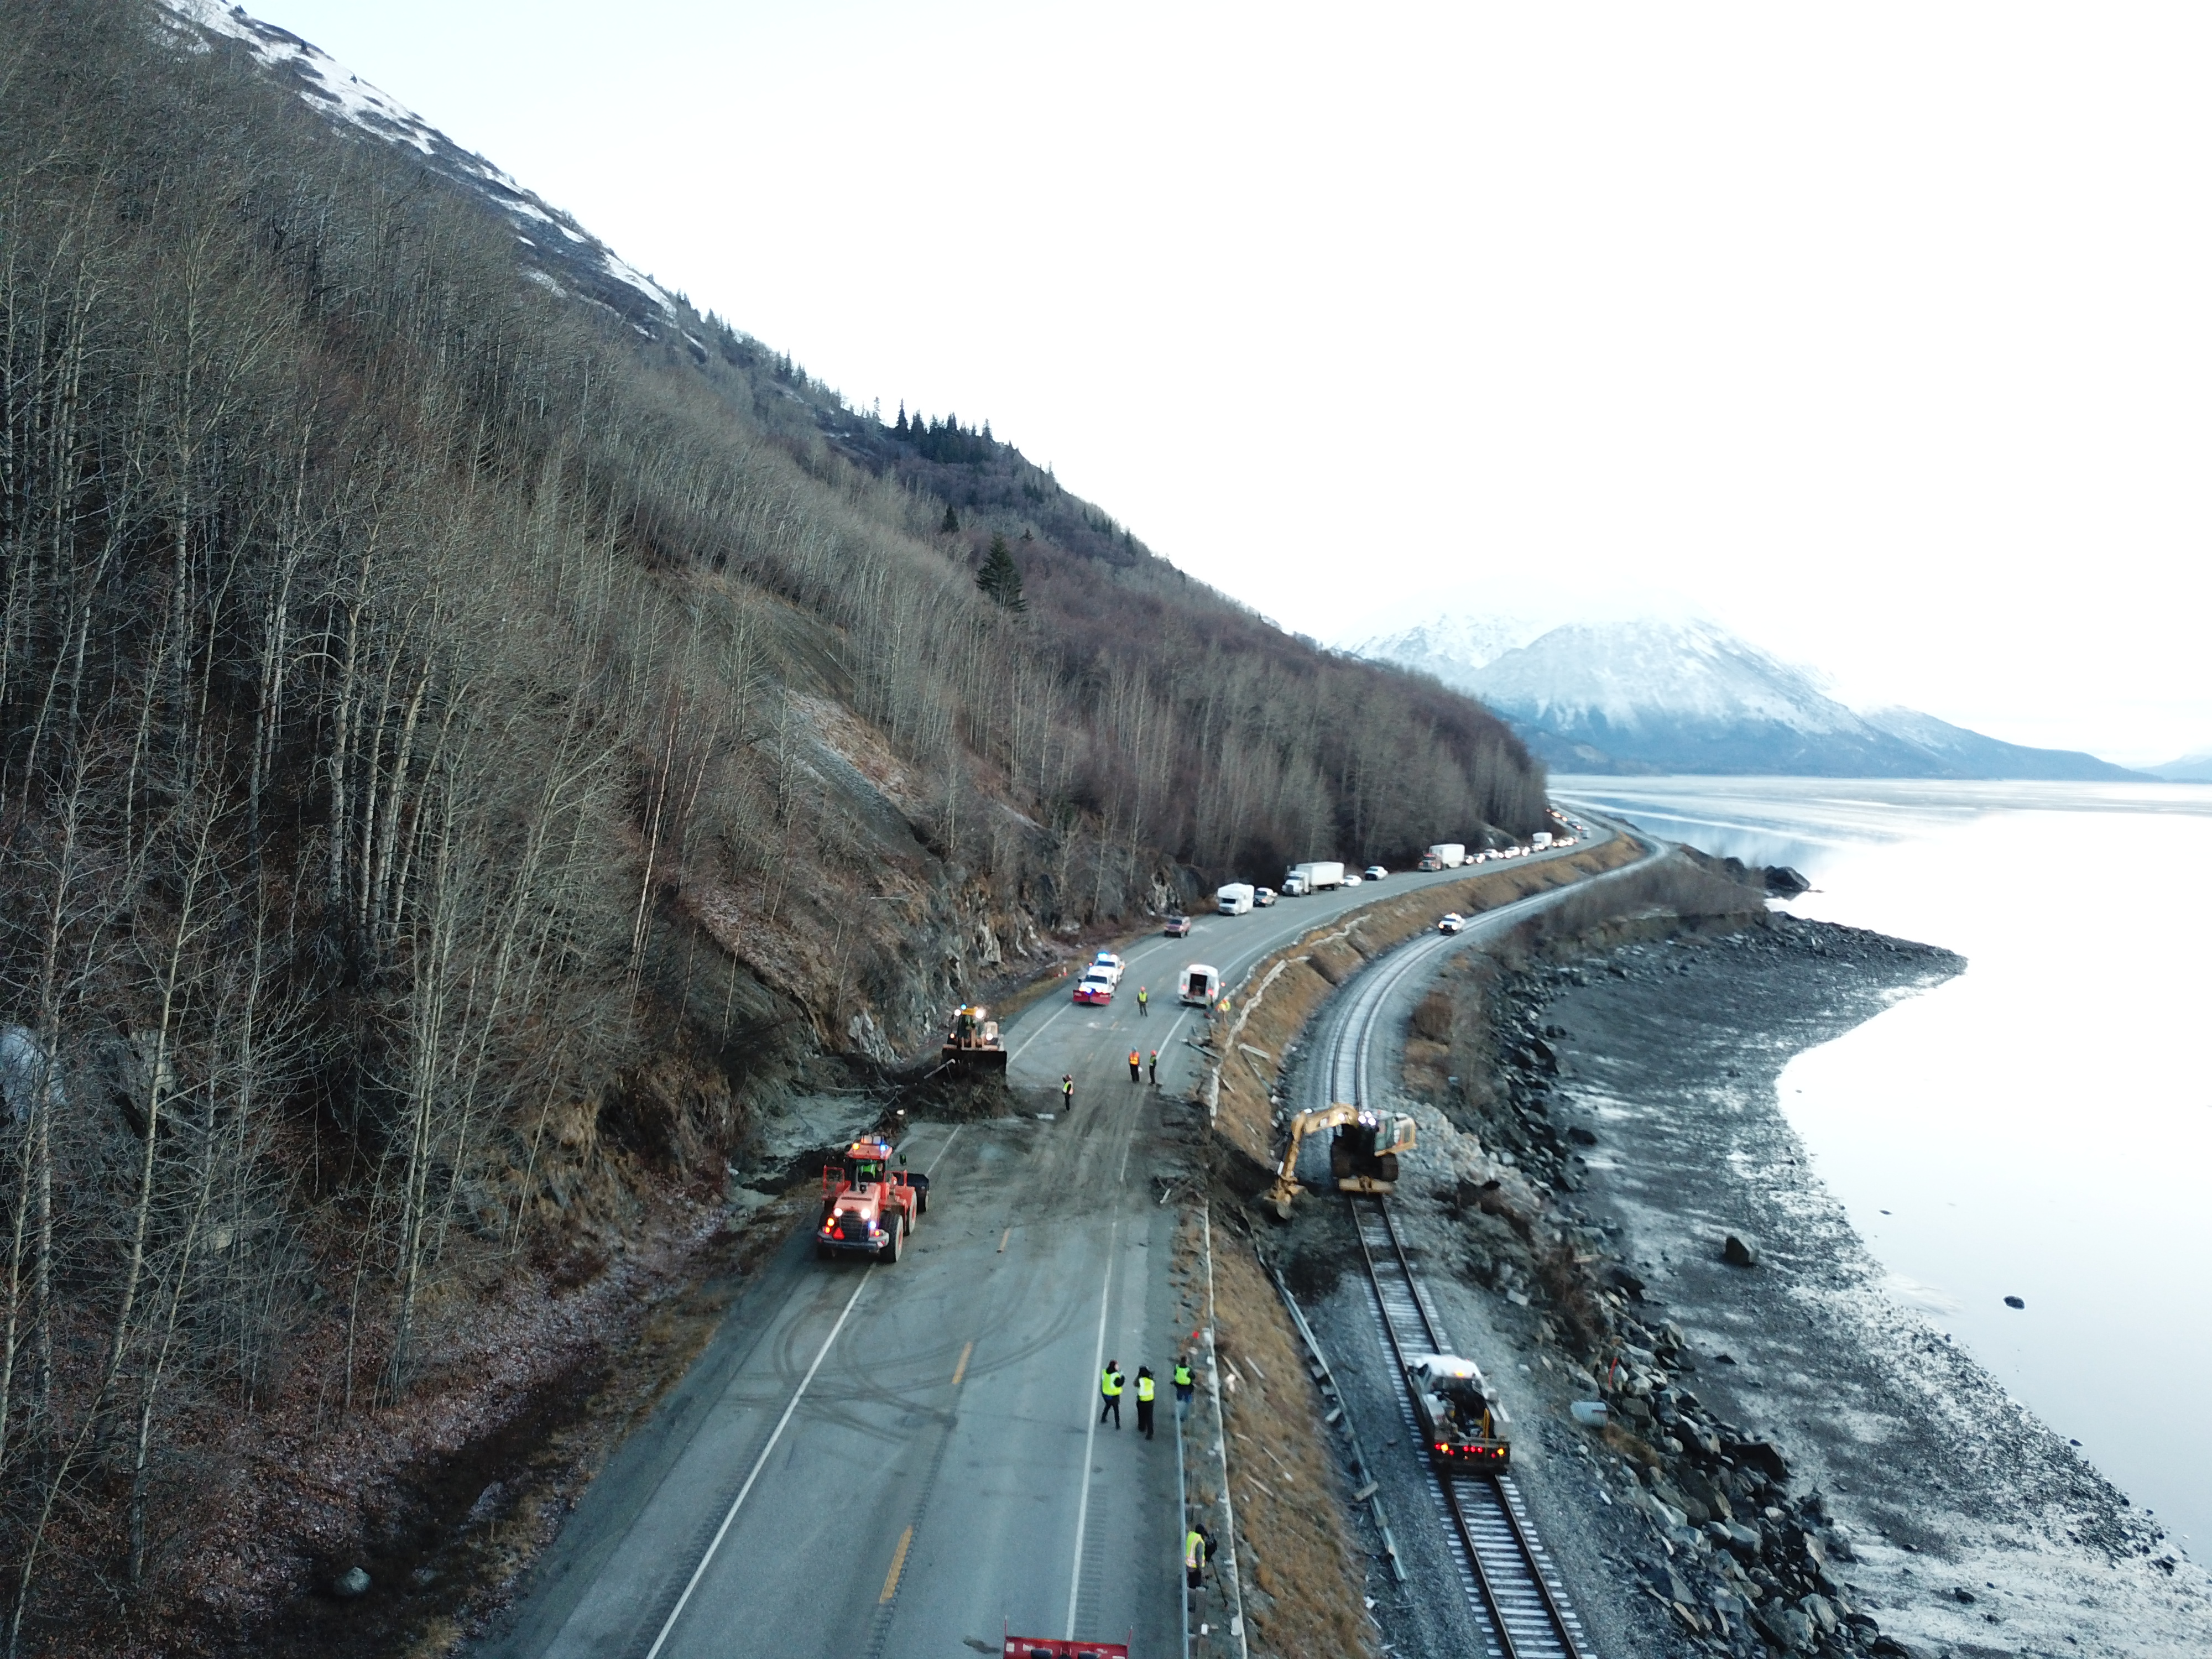 Alaska Department of Transportation crews work to clear a landslide that covered a portion of Seward Highway, near mile marker 105. (Photo courtesy Alaska Department of Transportation)